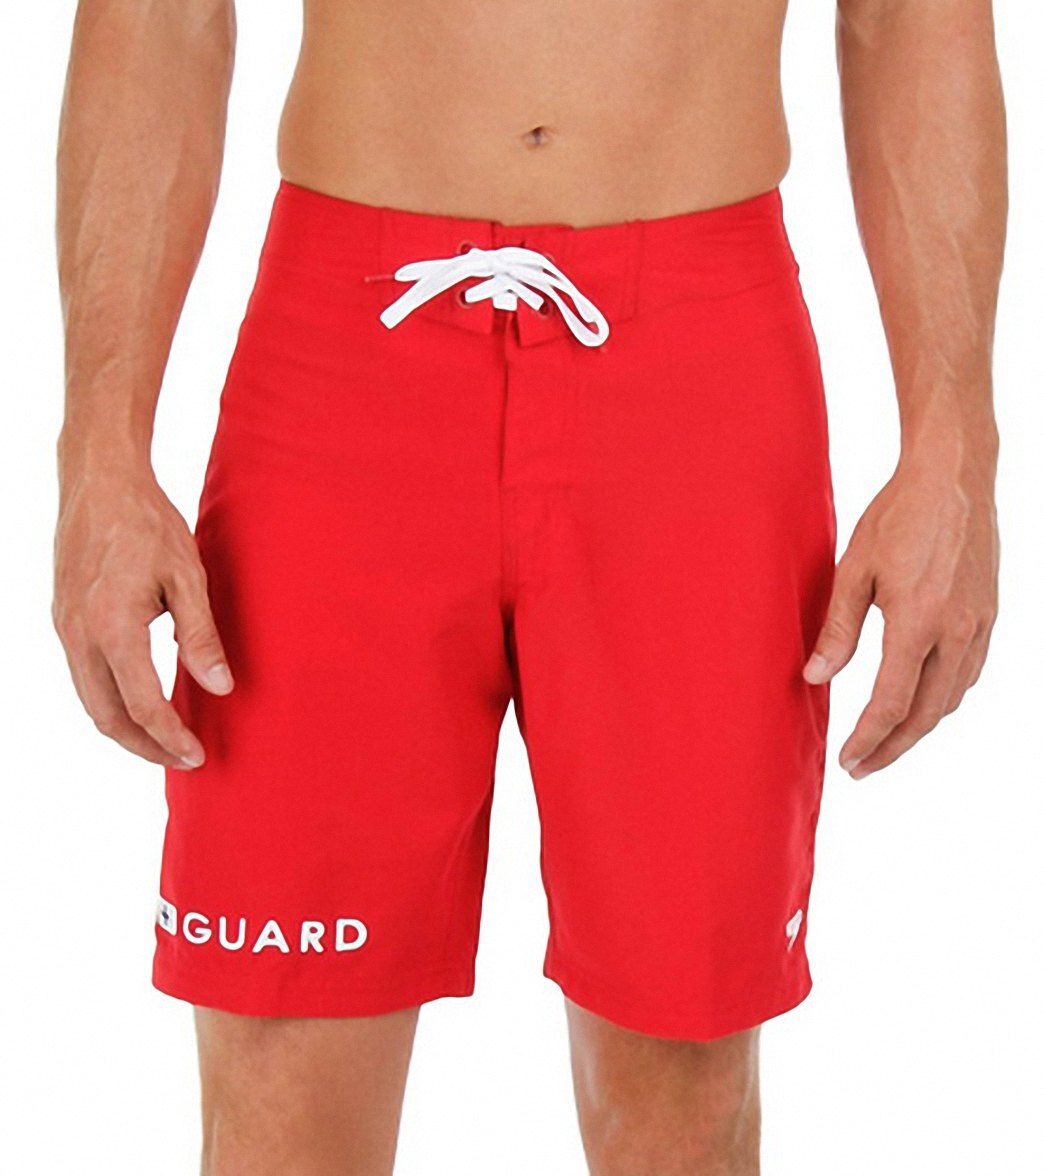 Speedo Size 34 Red Lifeguard 21 Boardshort